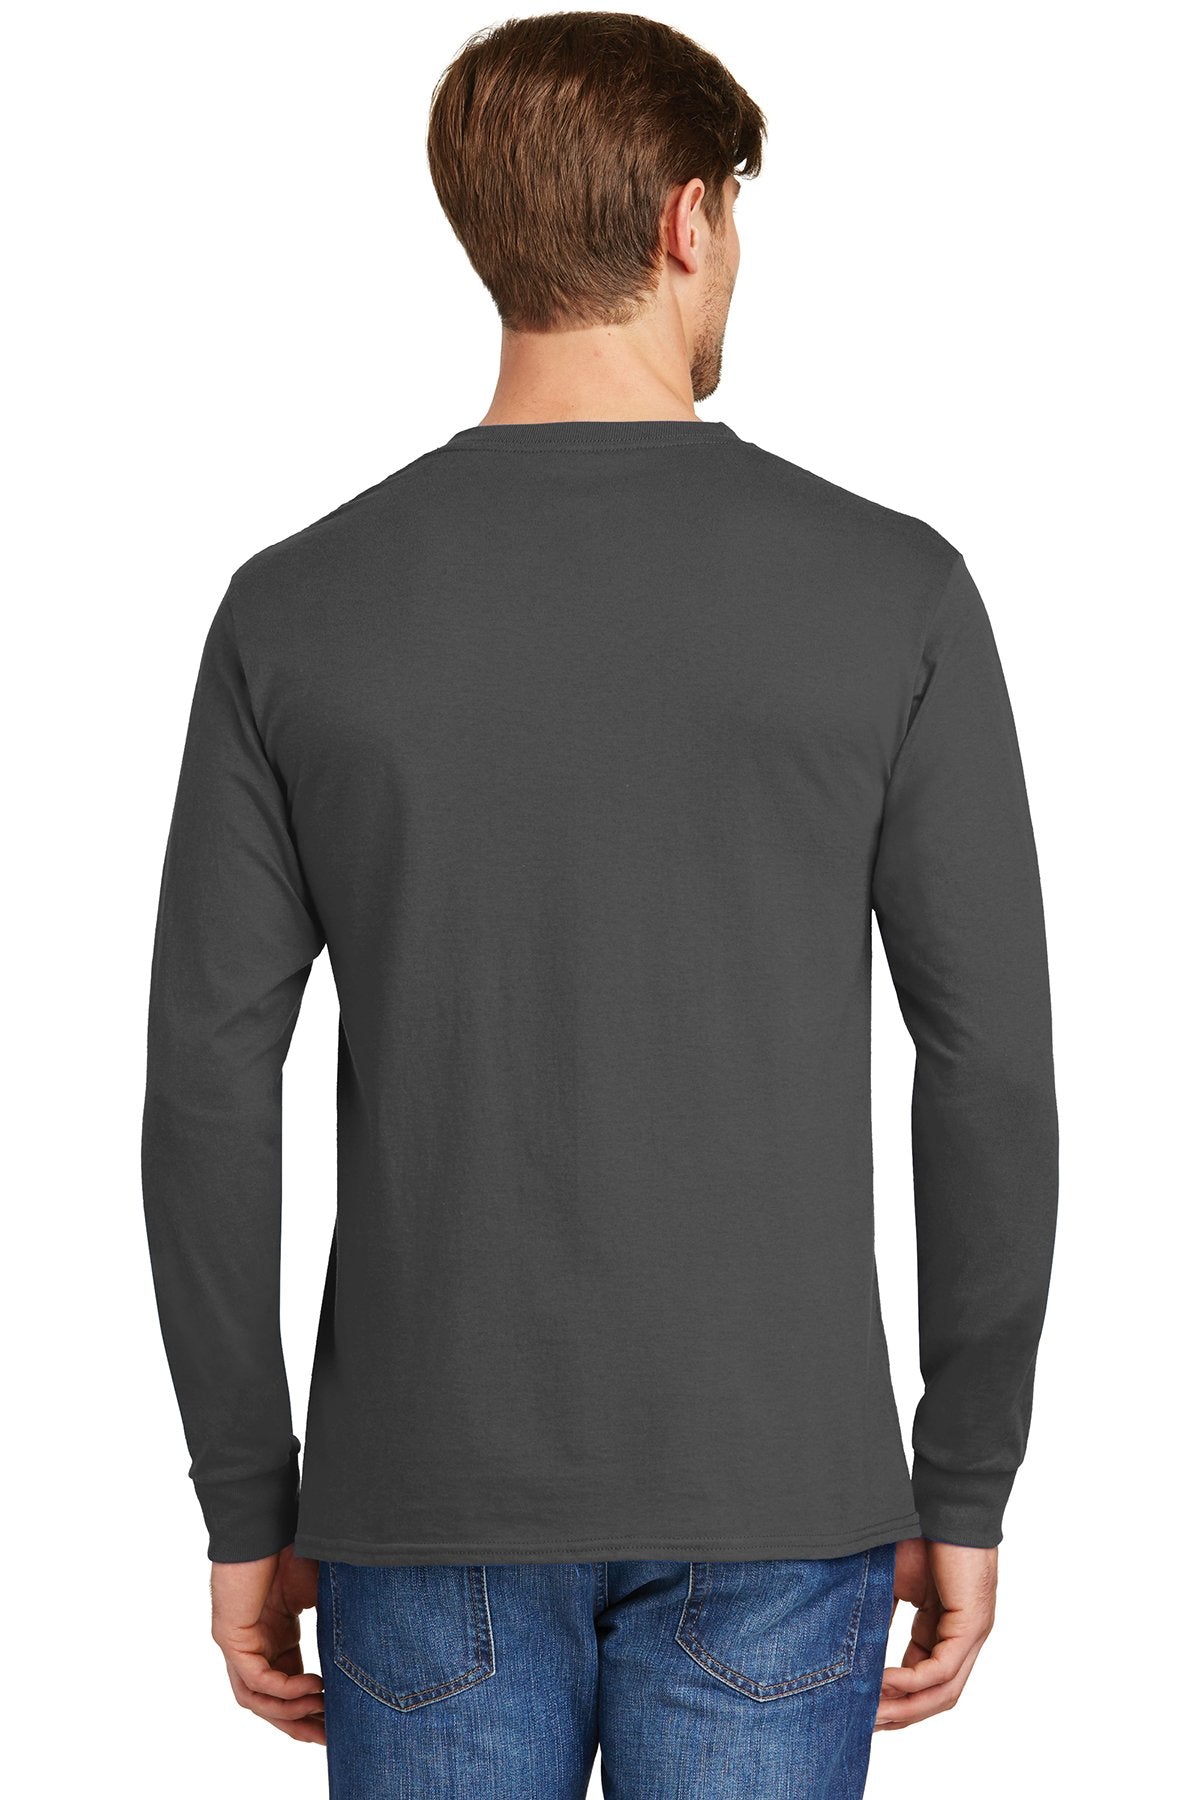 Hanes Tagless Cotton Long Sleeve T Shirt in Smoke Grey, add a custom design